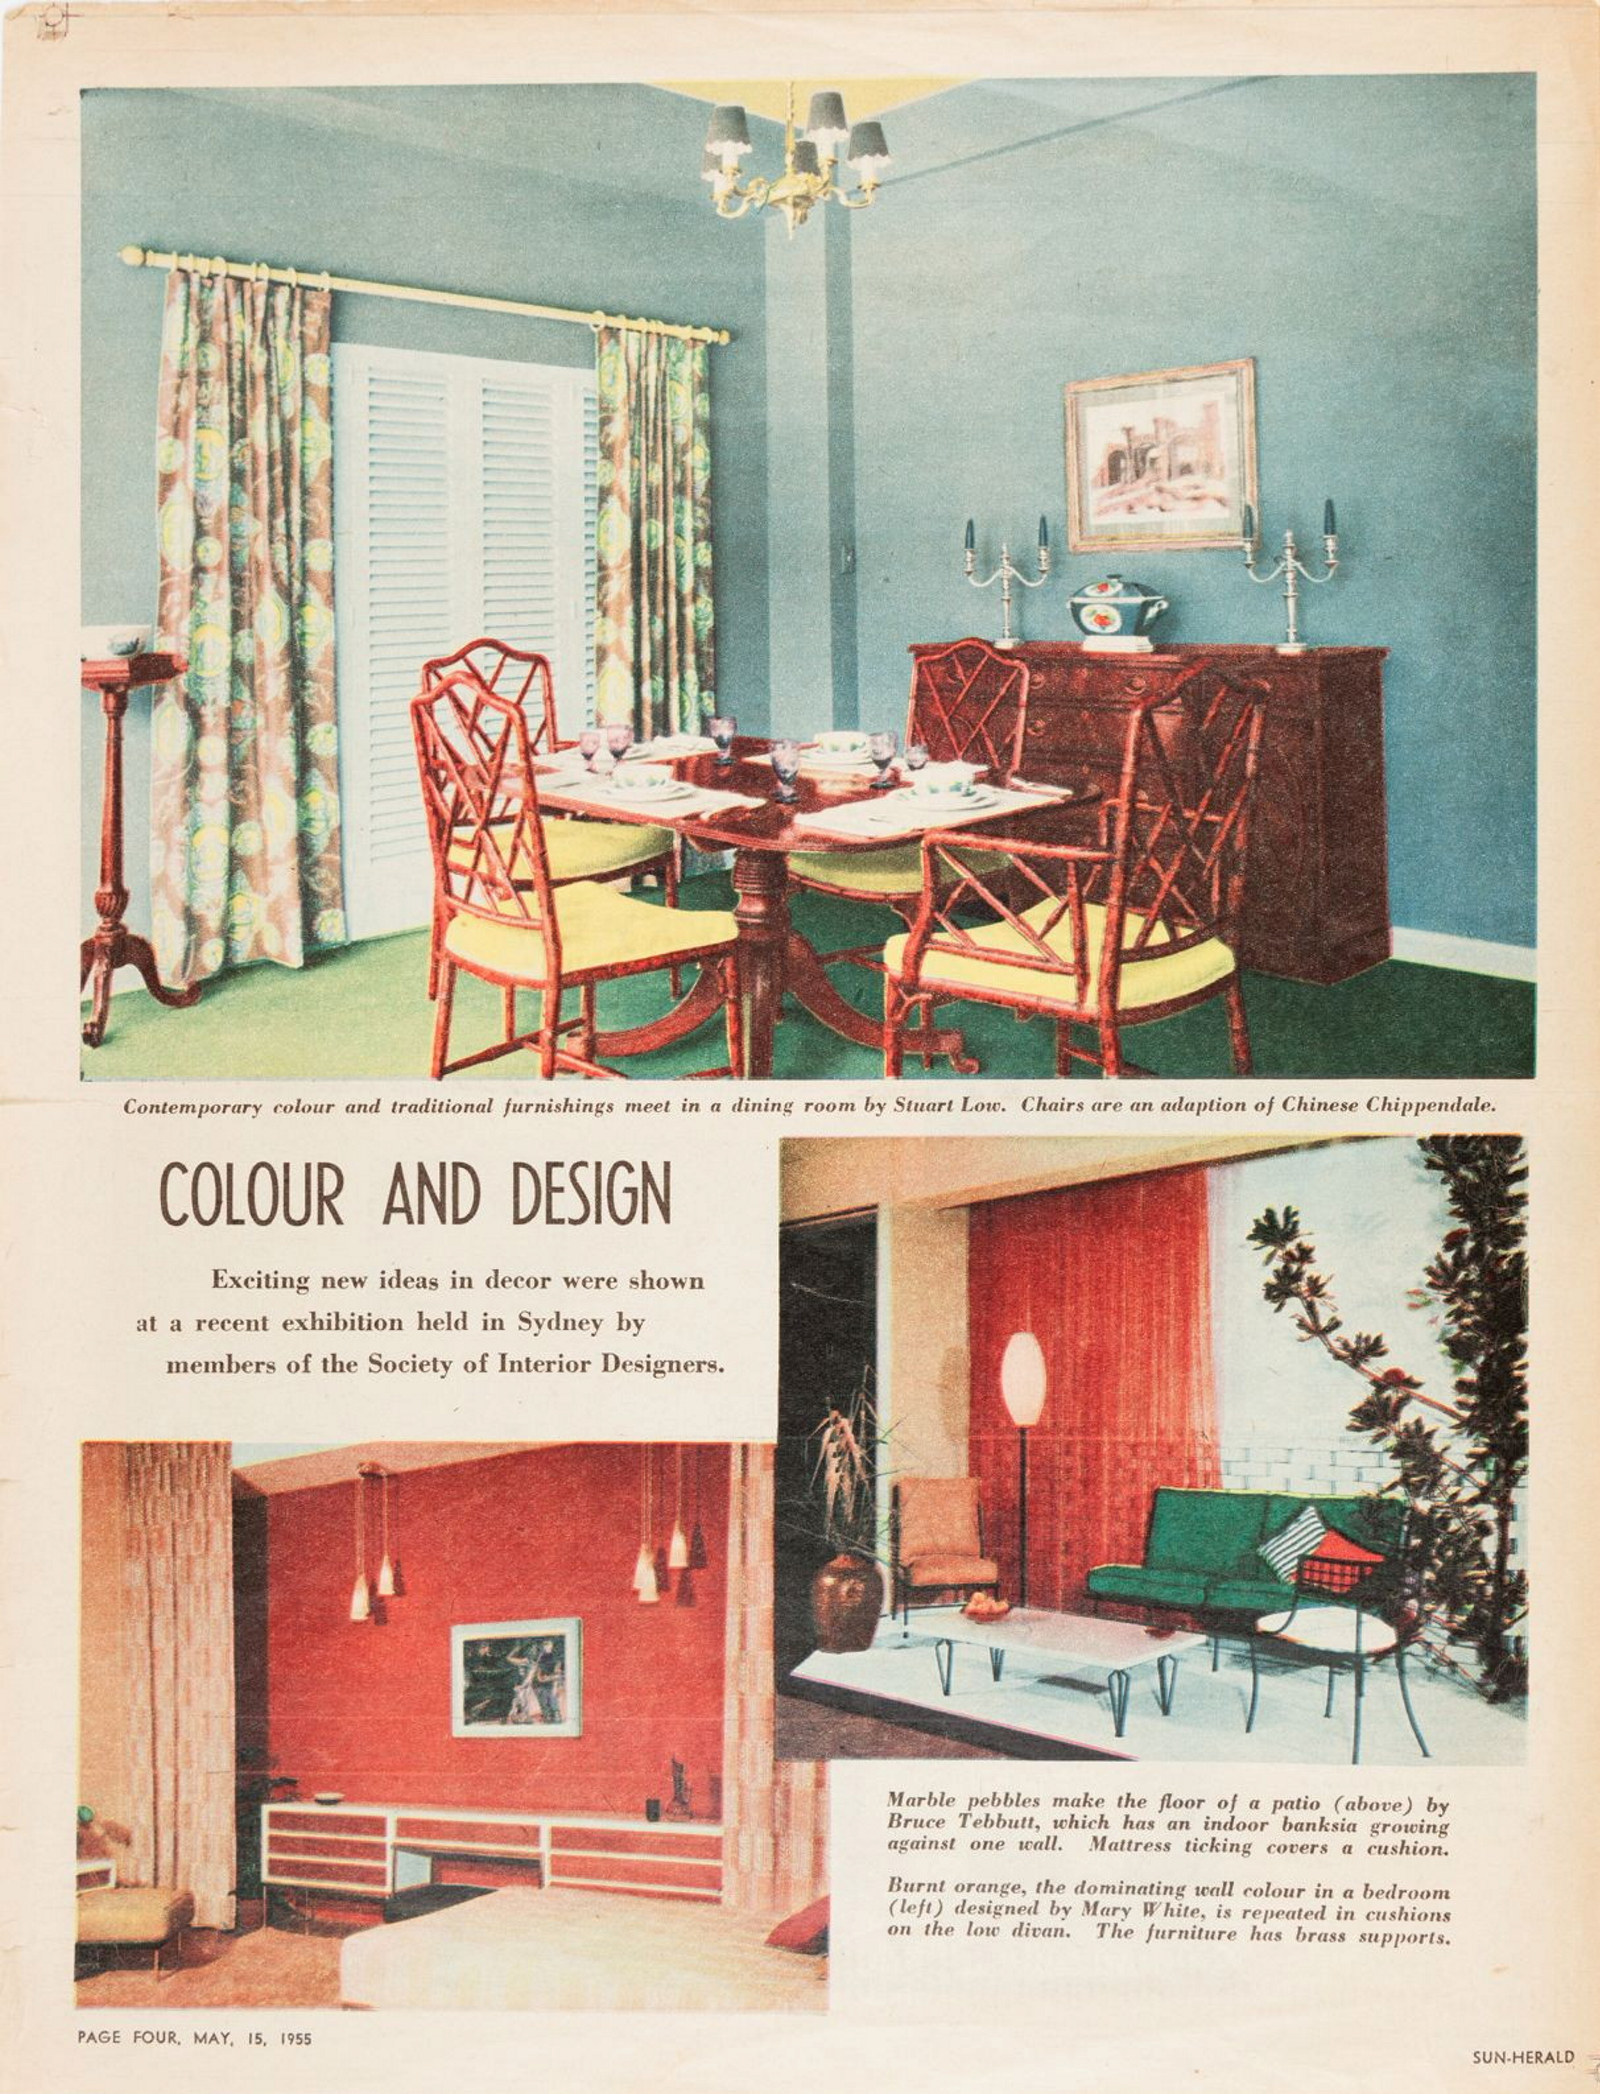 Society of Interior Designers (SID) exhibition, 1955